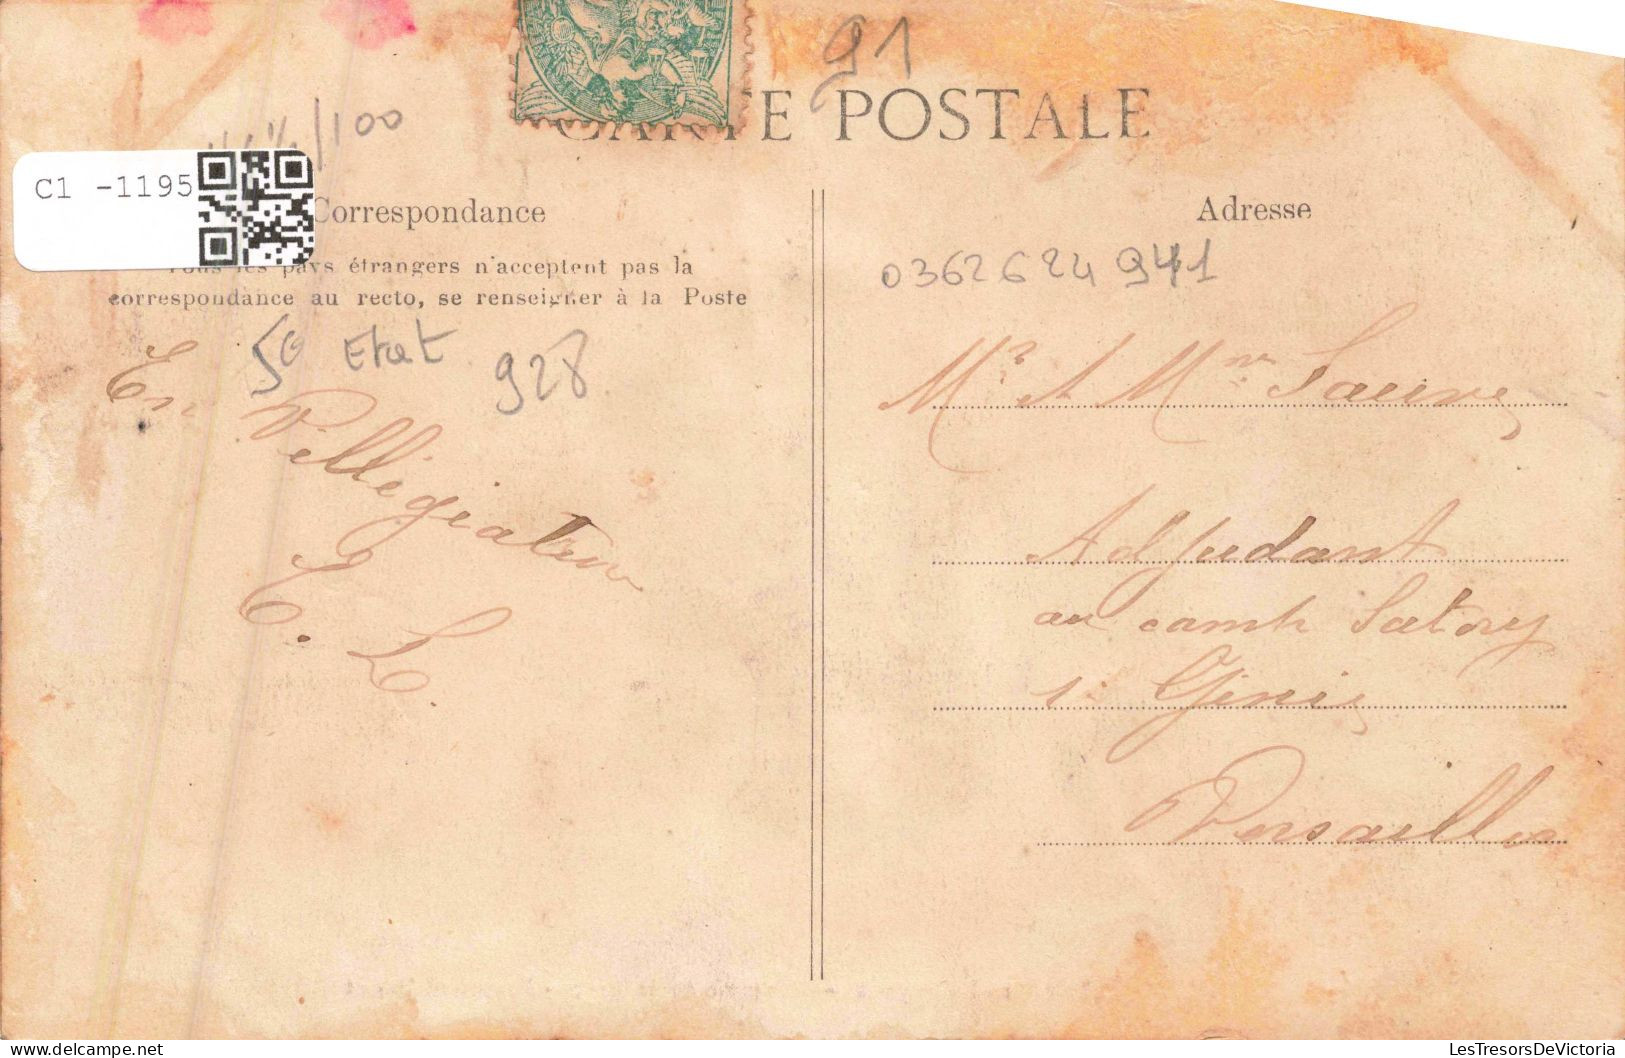 FRANCE - 91 - Marolles-en-Hurepoix - Avenue De La Gare - Propriété Josset - Carte Postale Ancienne - Altri & Non Classificati